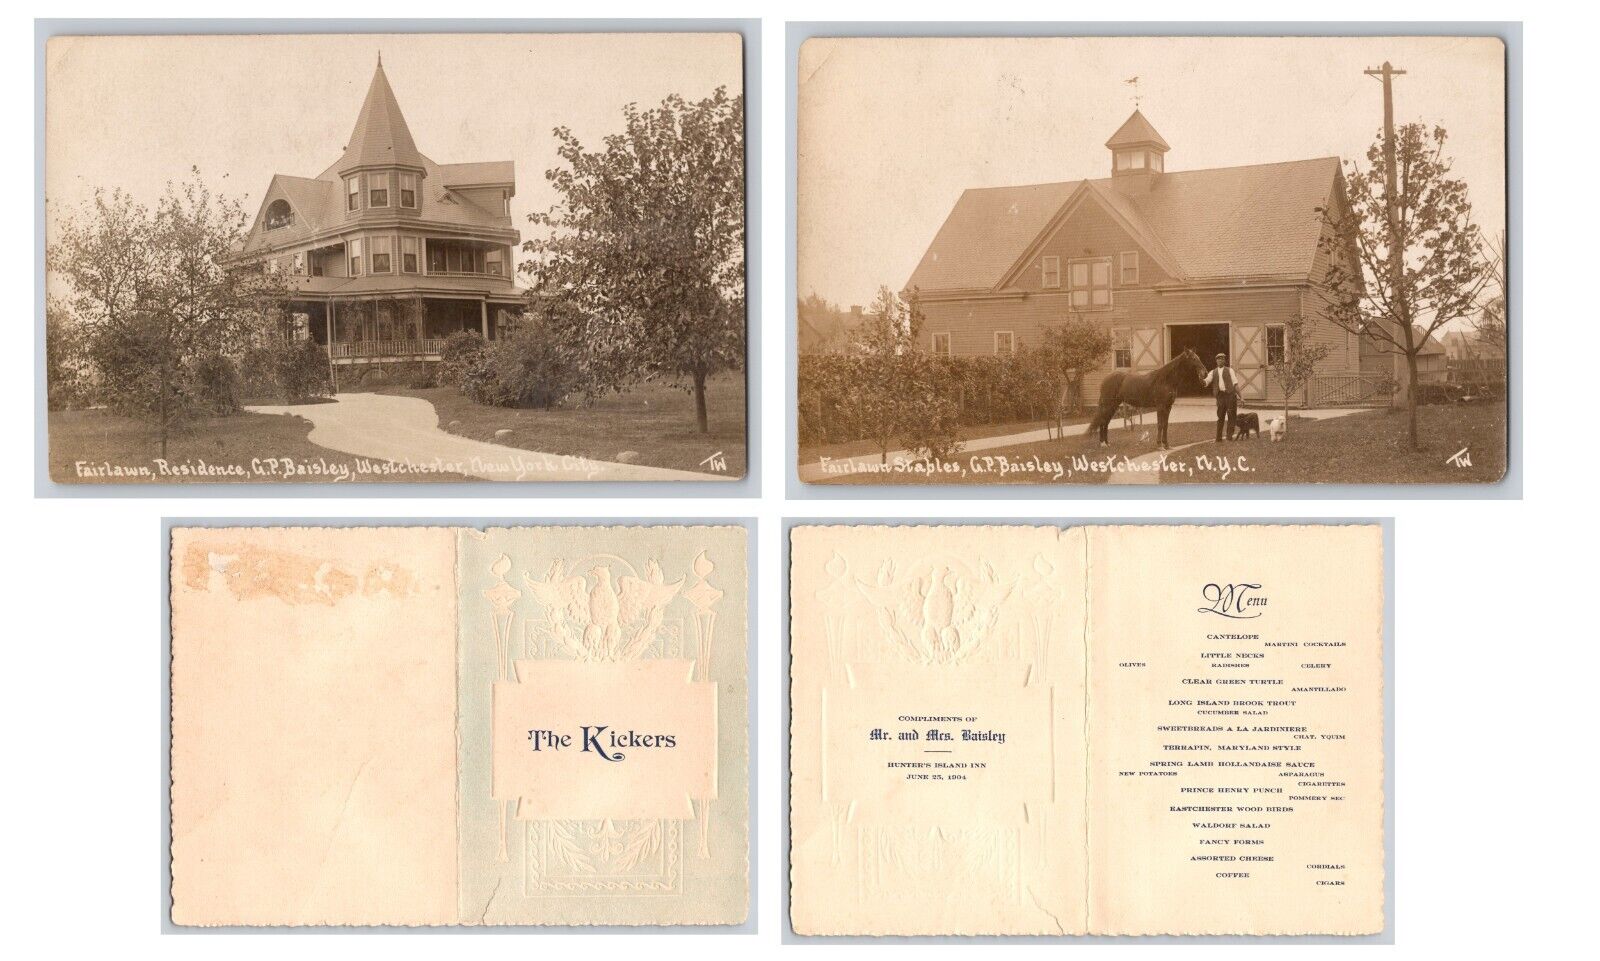 Postcard RPPC Lot New York City Fairlawn Westchester GP Baisley Dinner Menu 1904